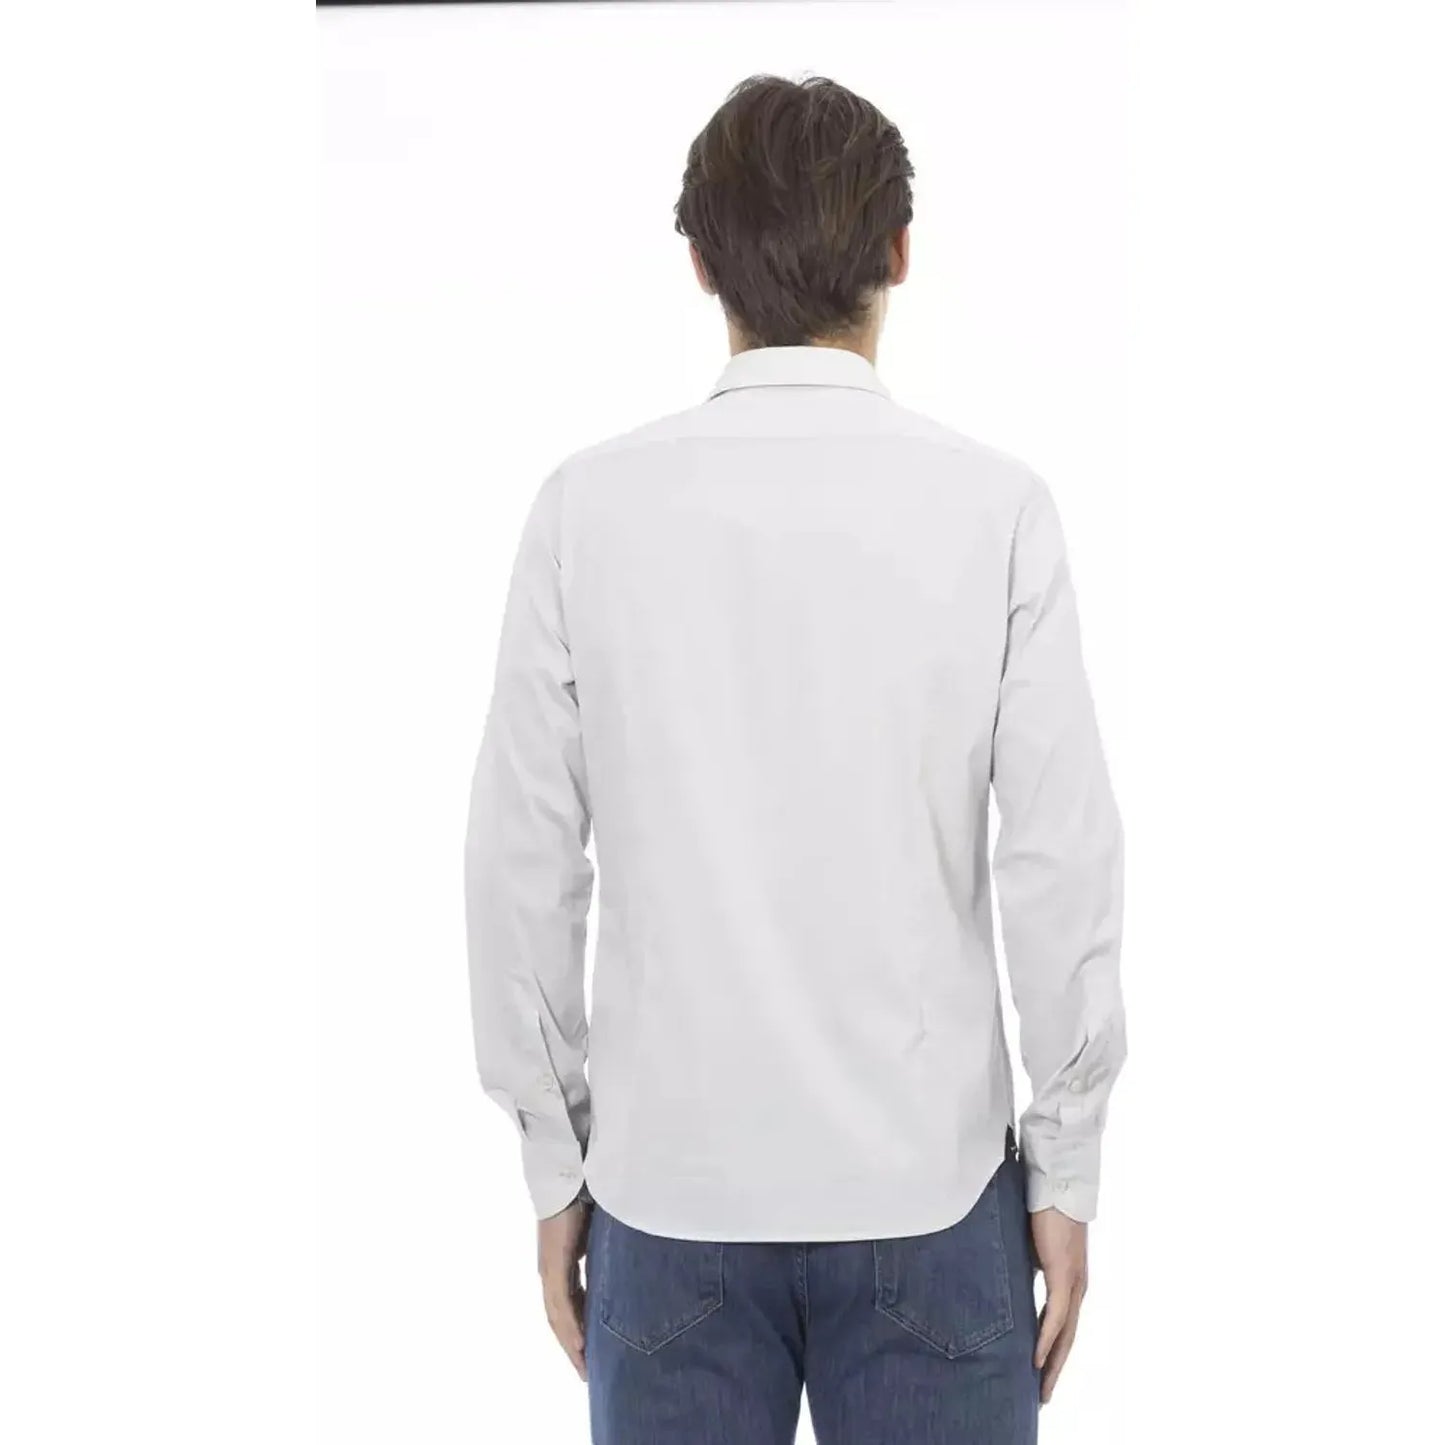 Baldinini Trend Sleek Gray Slim Fit Designer Shirt gray-cotton-shirt-13